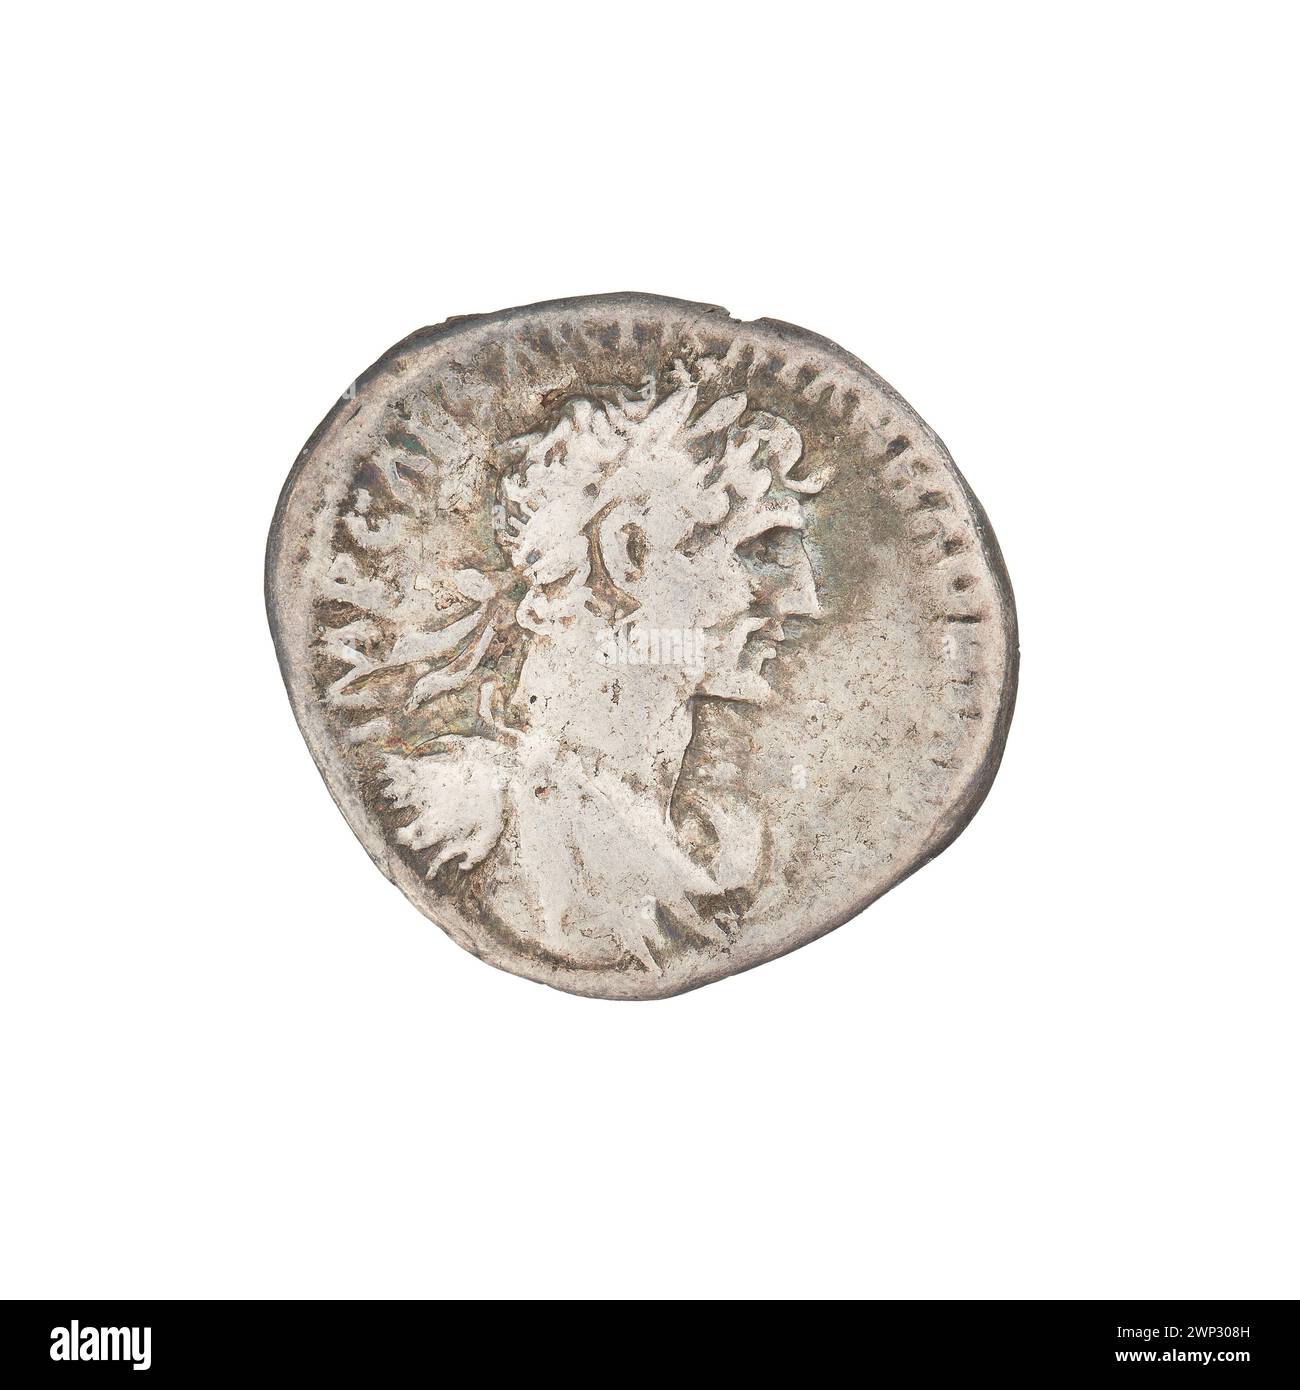 denarius; Hadrian (76-138; Roman emperor 117-138); 118 (118-00-00-118-00-00);Pietas (personification), busts, veils, laurel wreaths Stock Photo